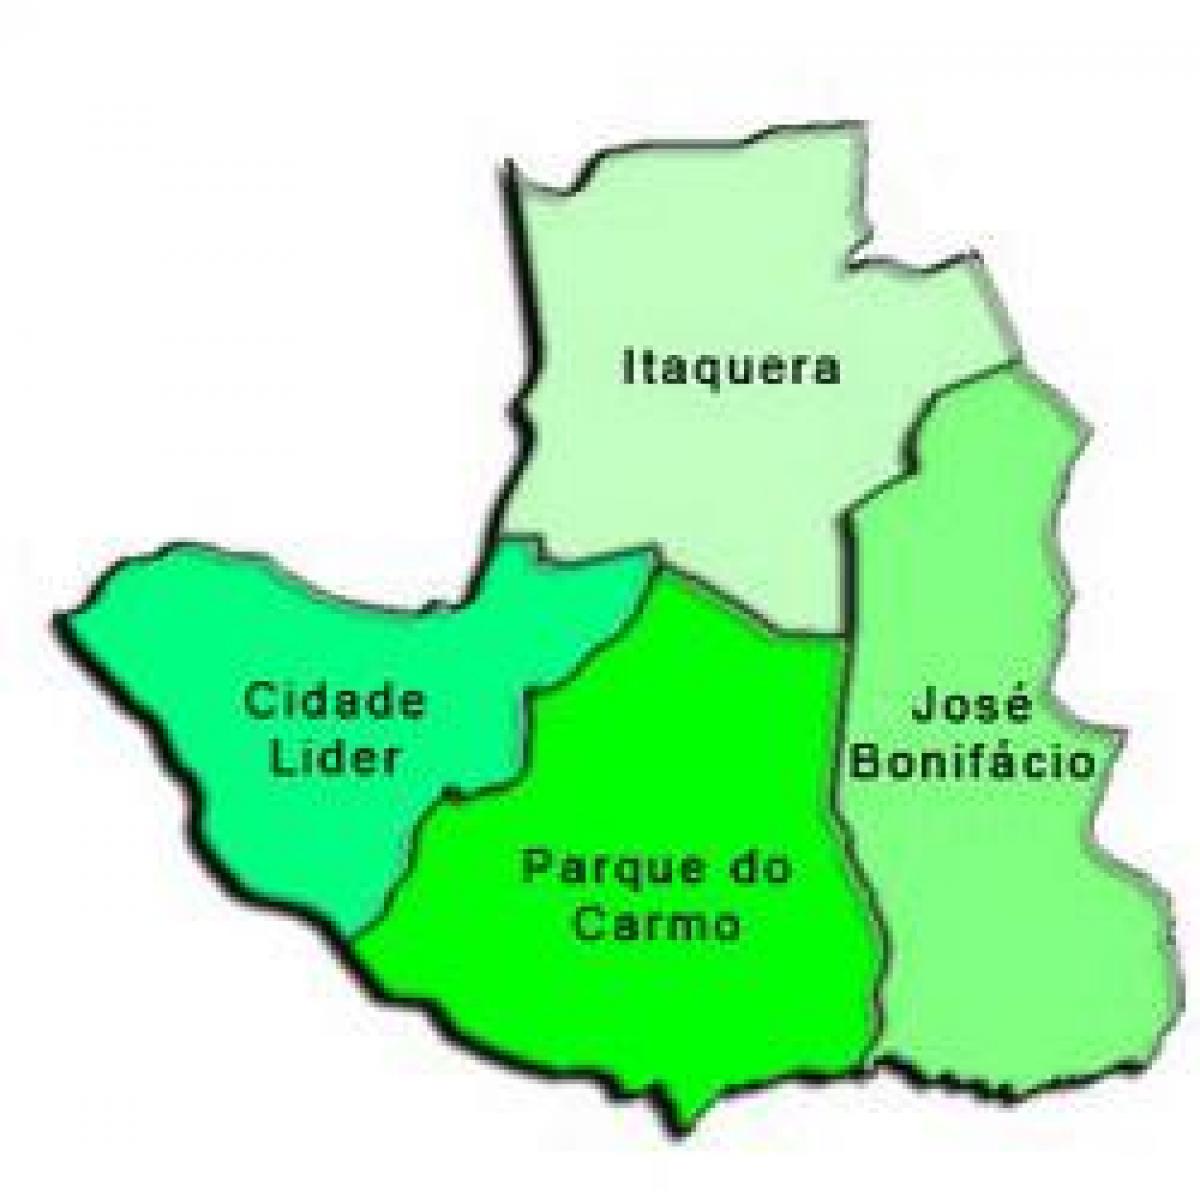 Zemljevid Itaquera sub-prefekturi